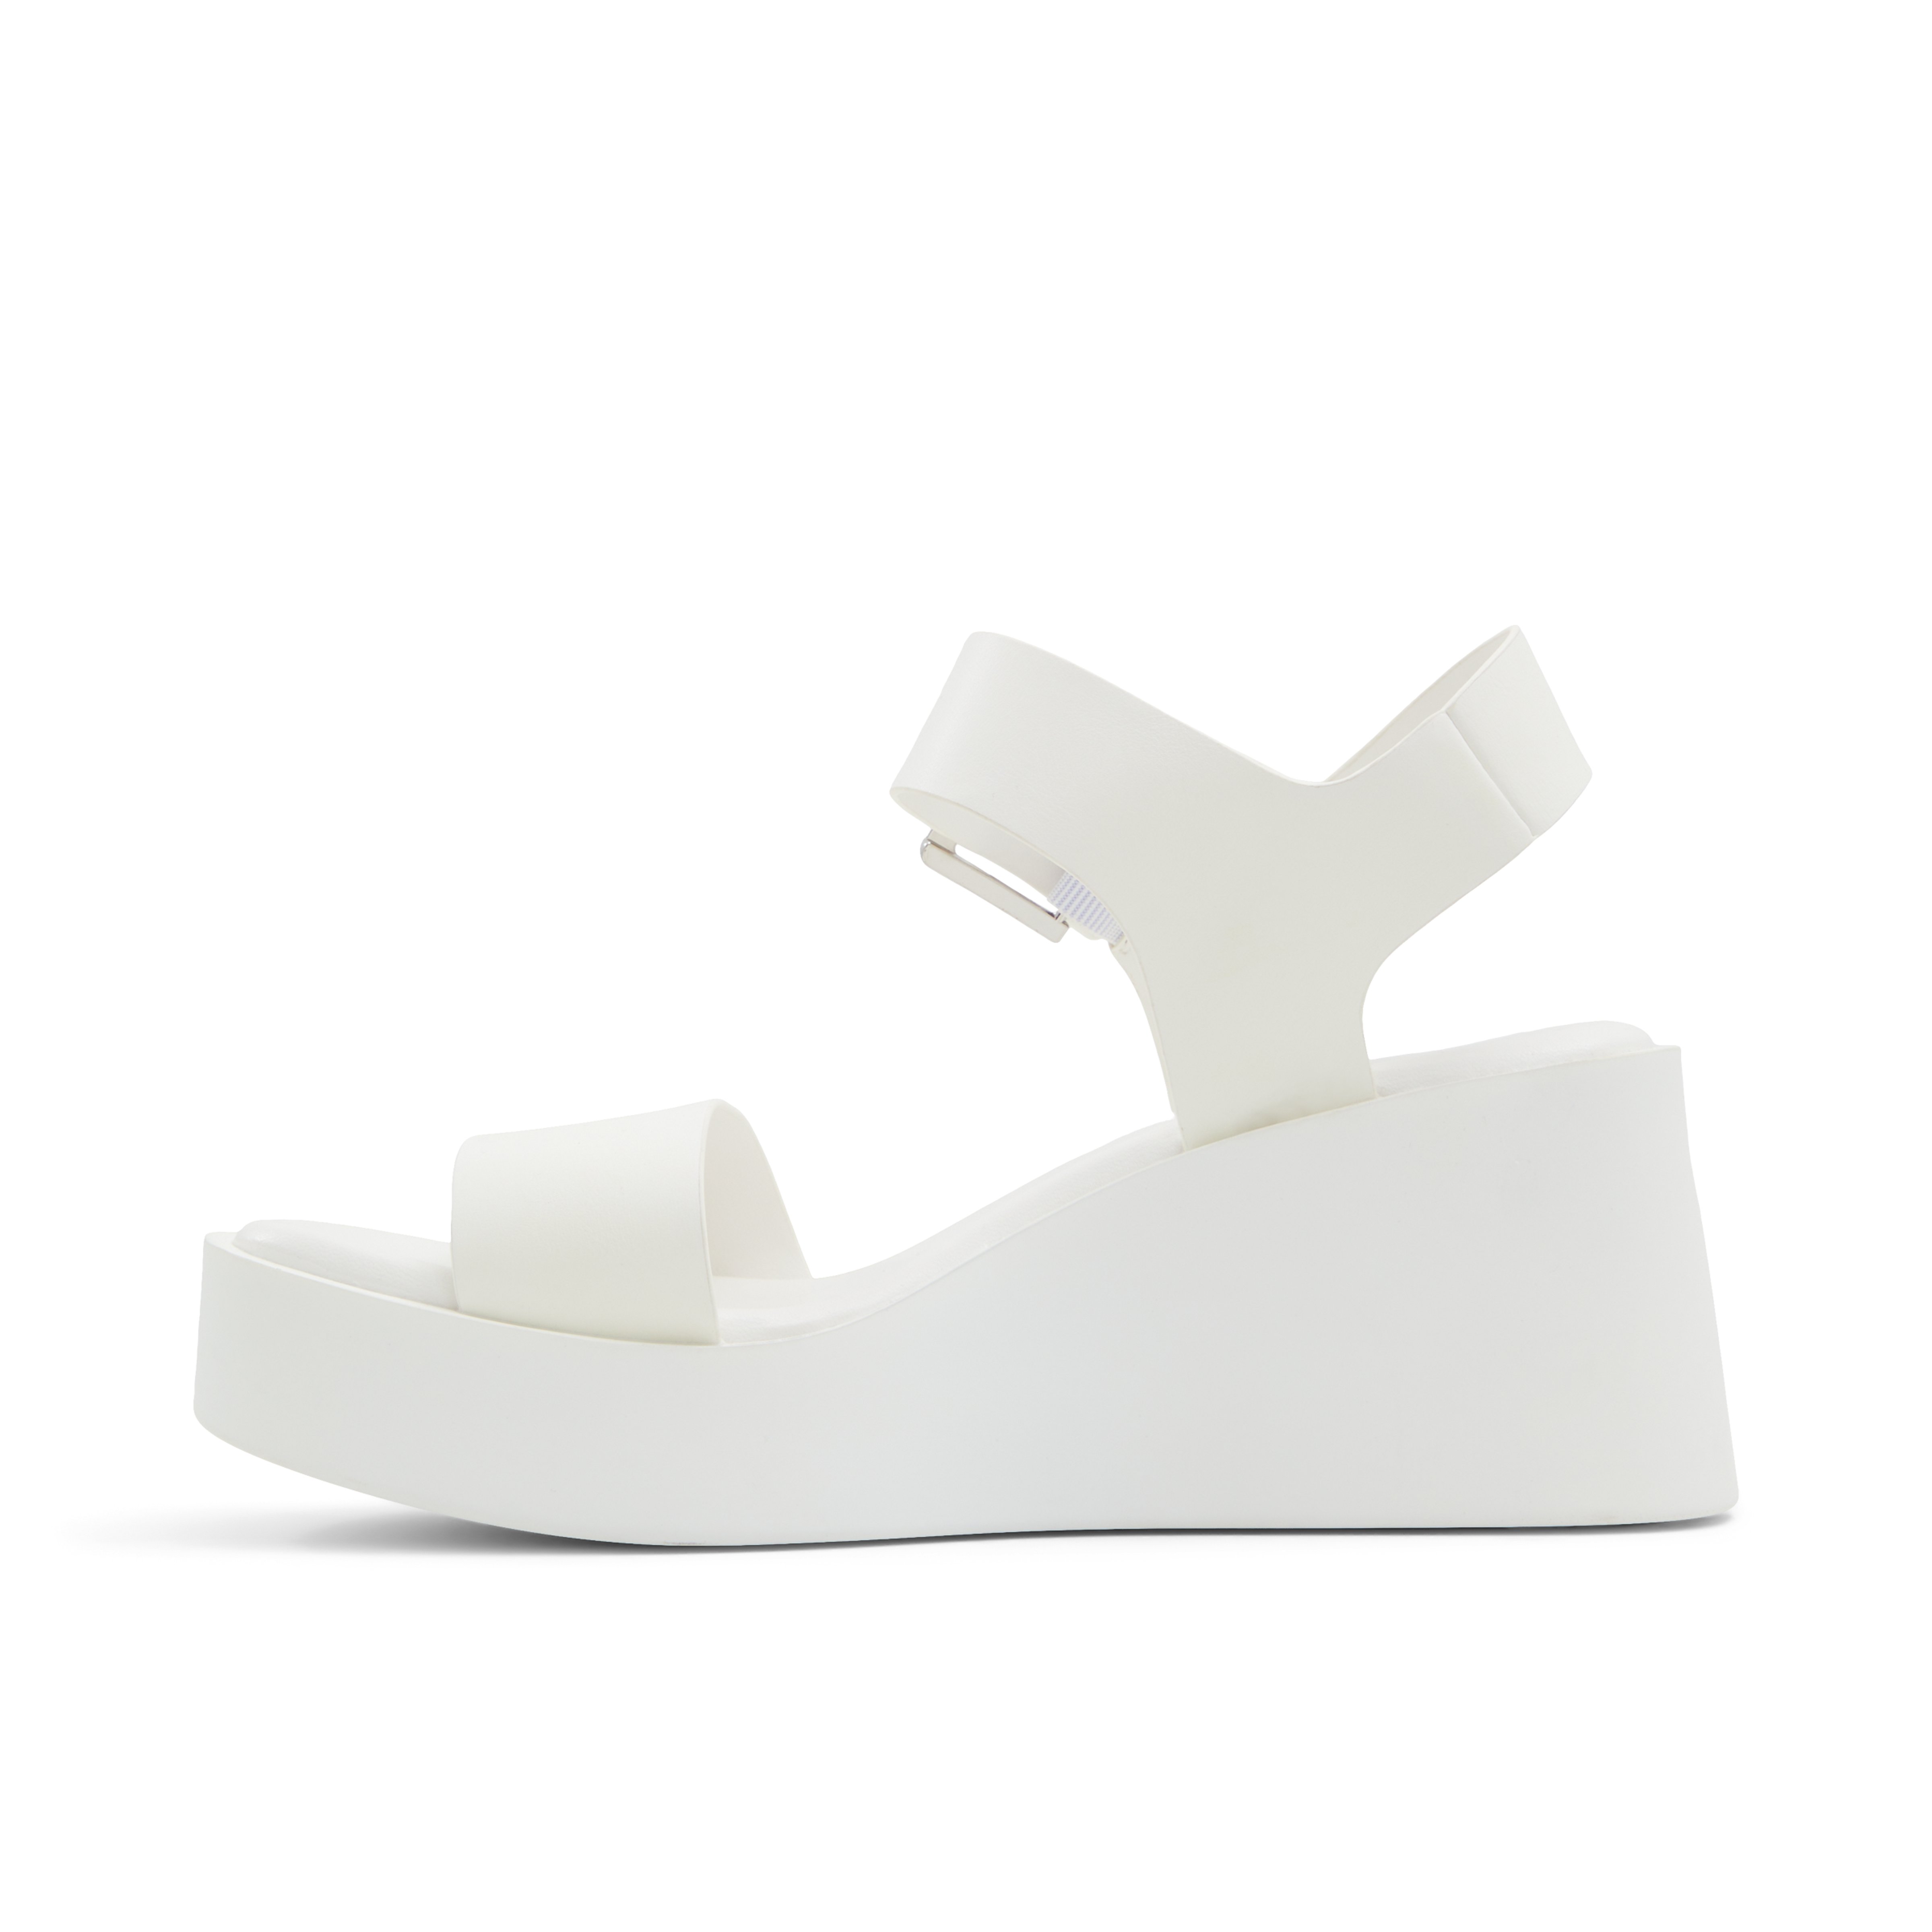 Merisa High heel platform sandals - Wedge